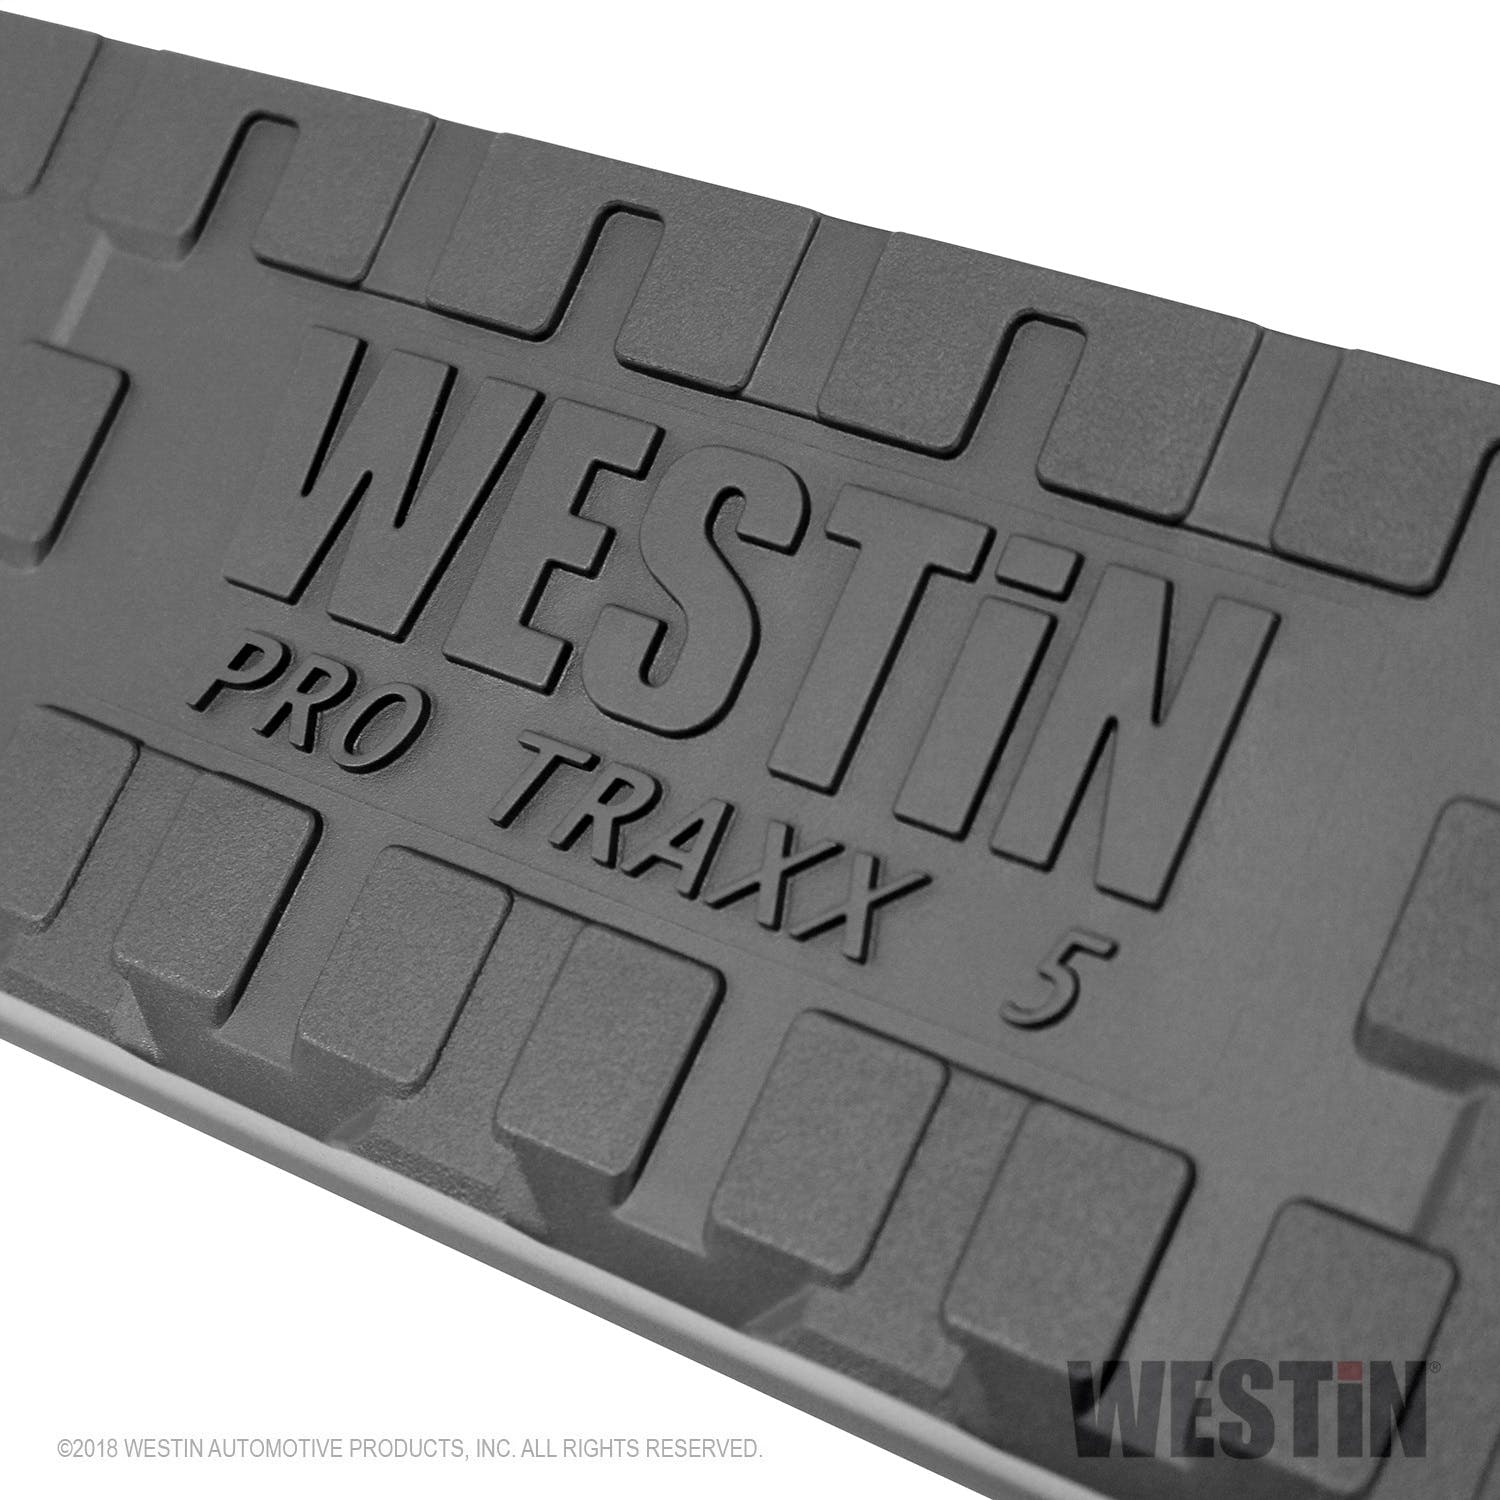 Westin Automotive 21-54145 Pro Traxx 5 Oval Nerf Step Bars Black